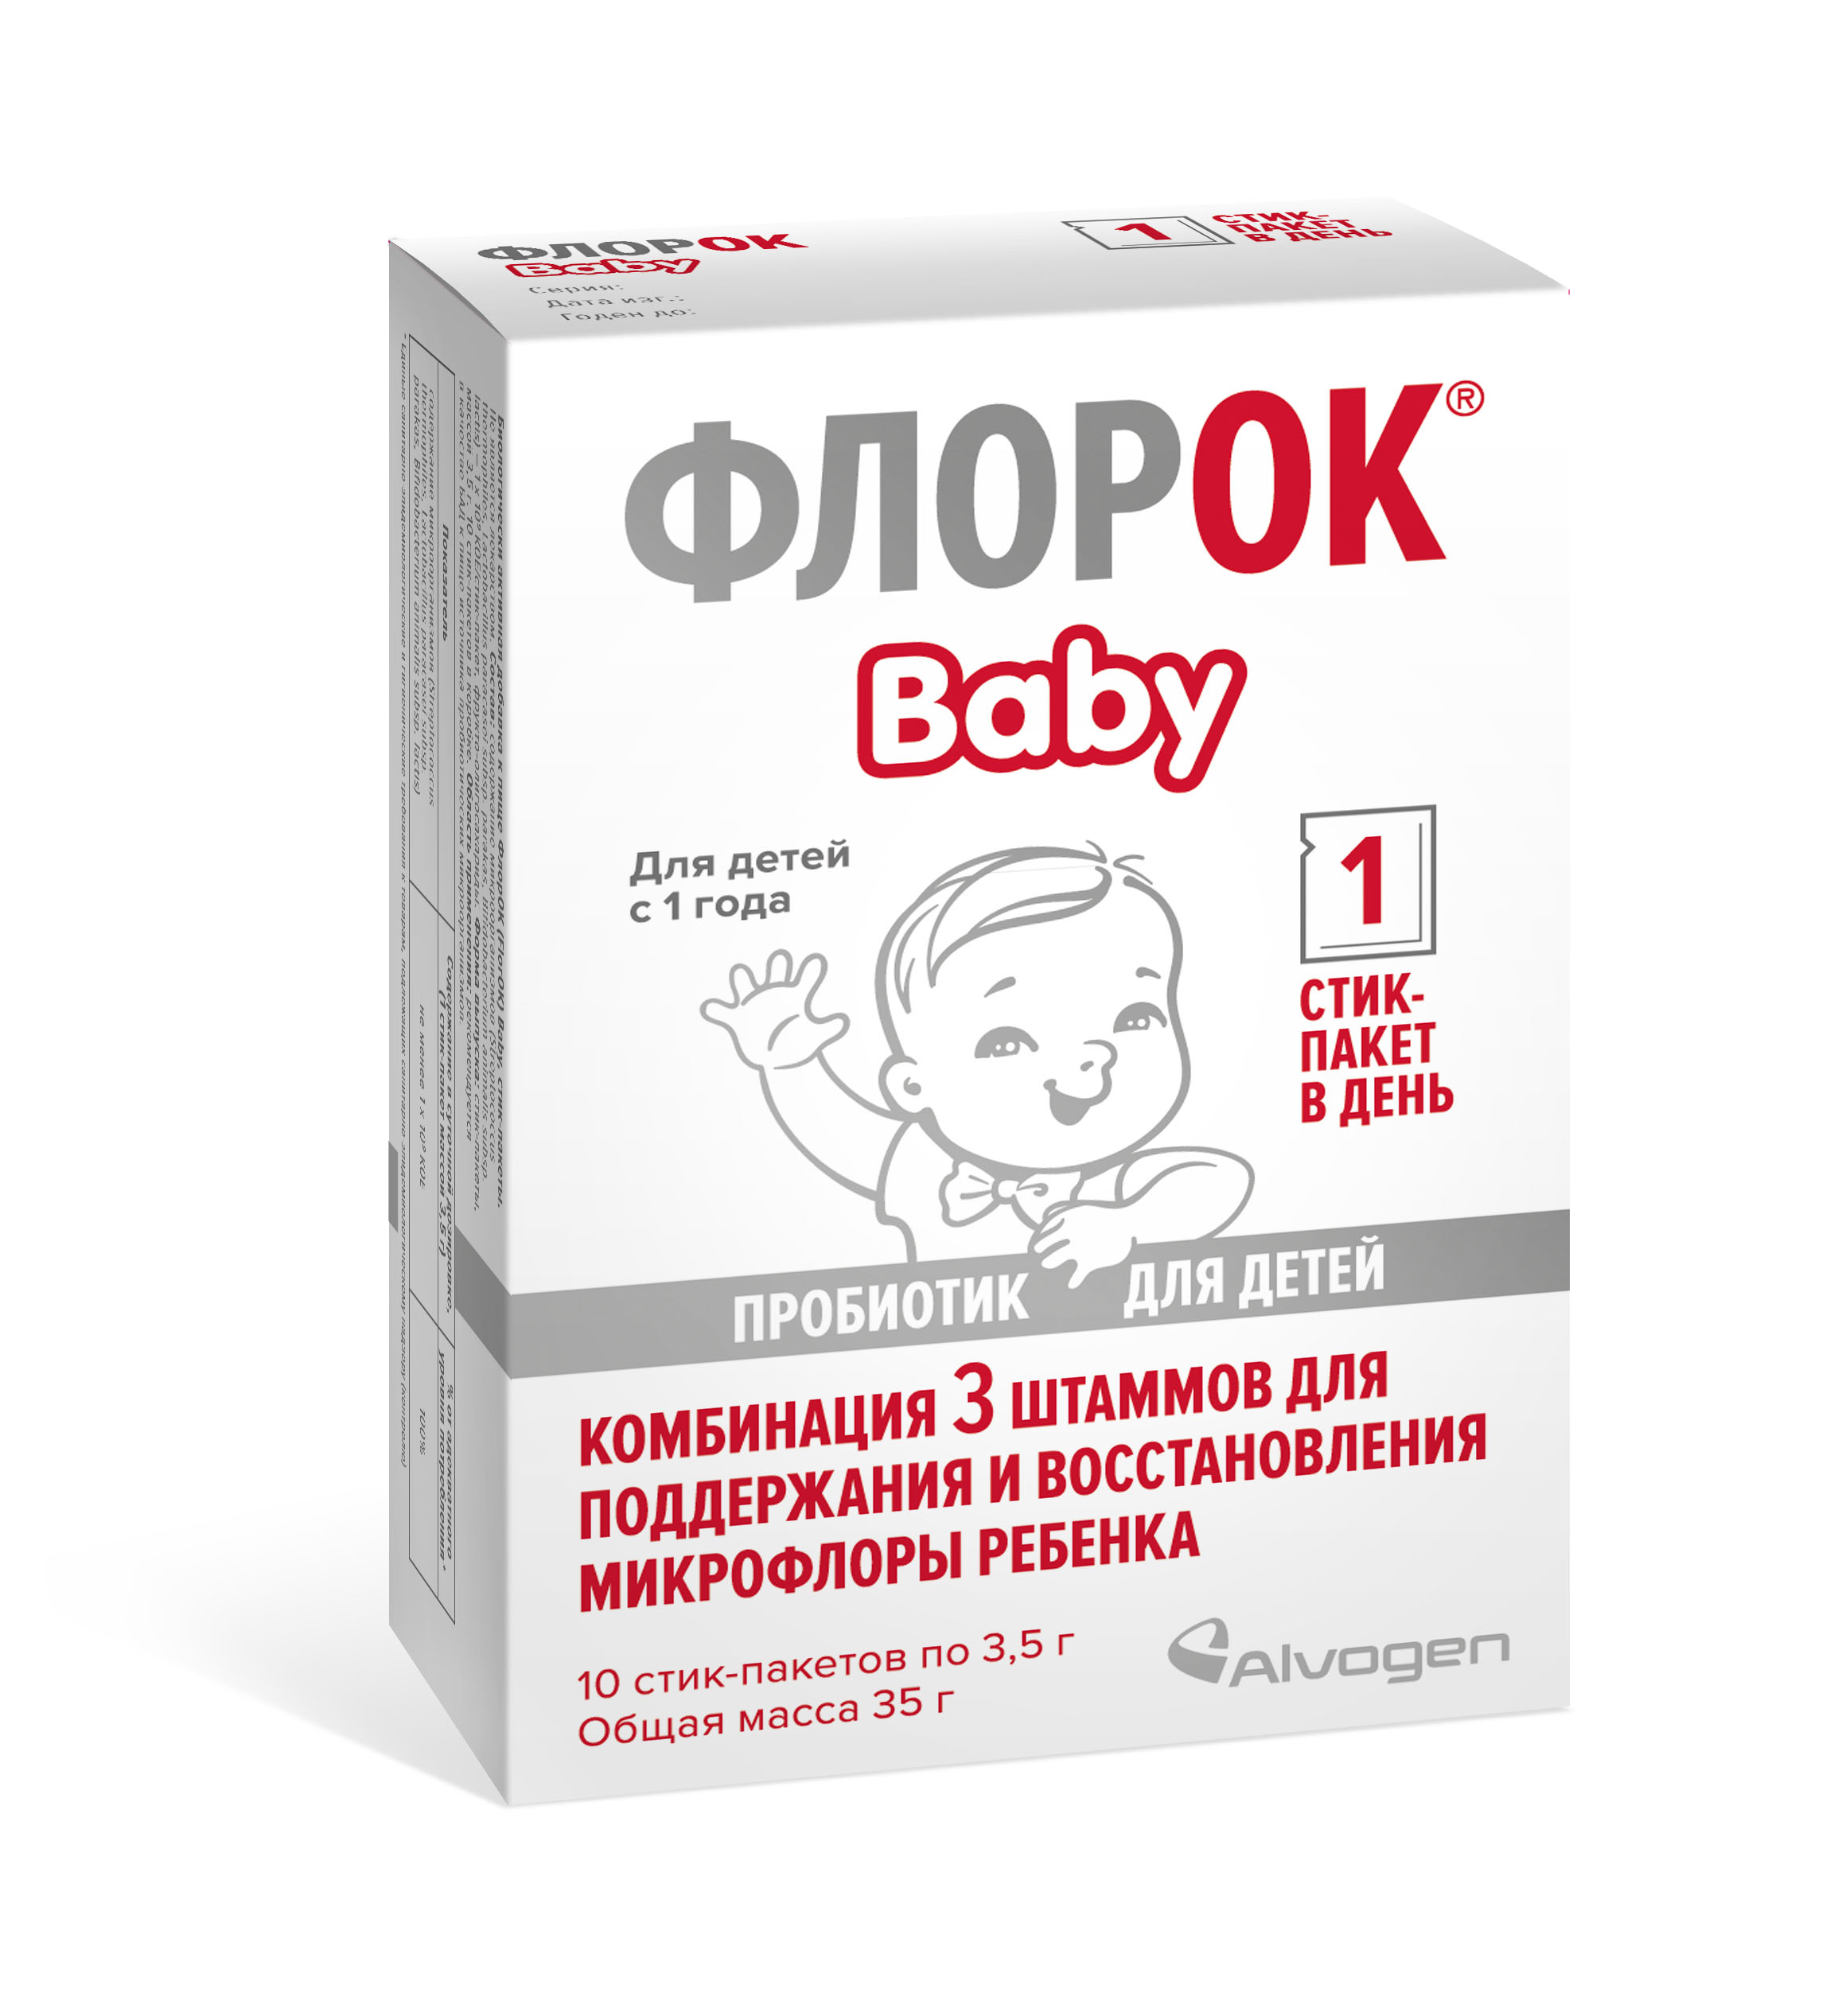 Флорок baby стик-пакеты массой 3,5 г №10